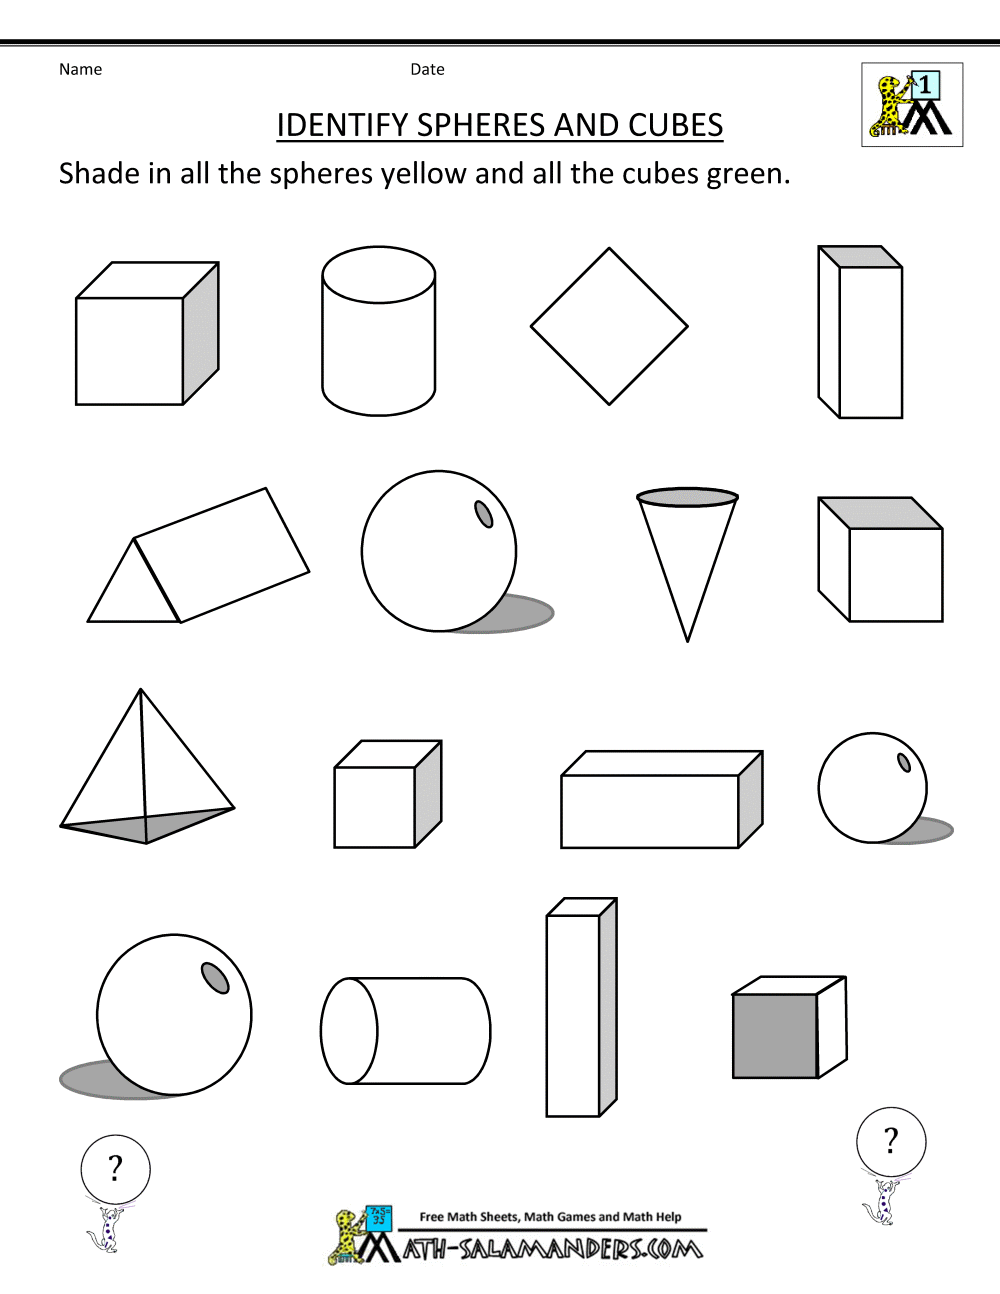  d shapes worksheets. Addition clipart shape